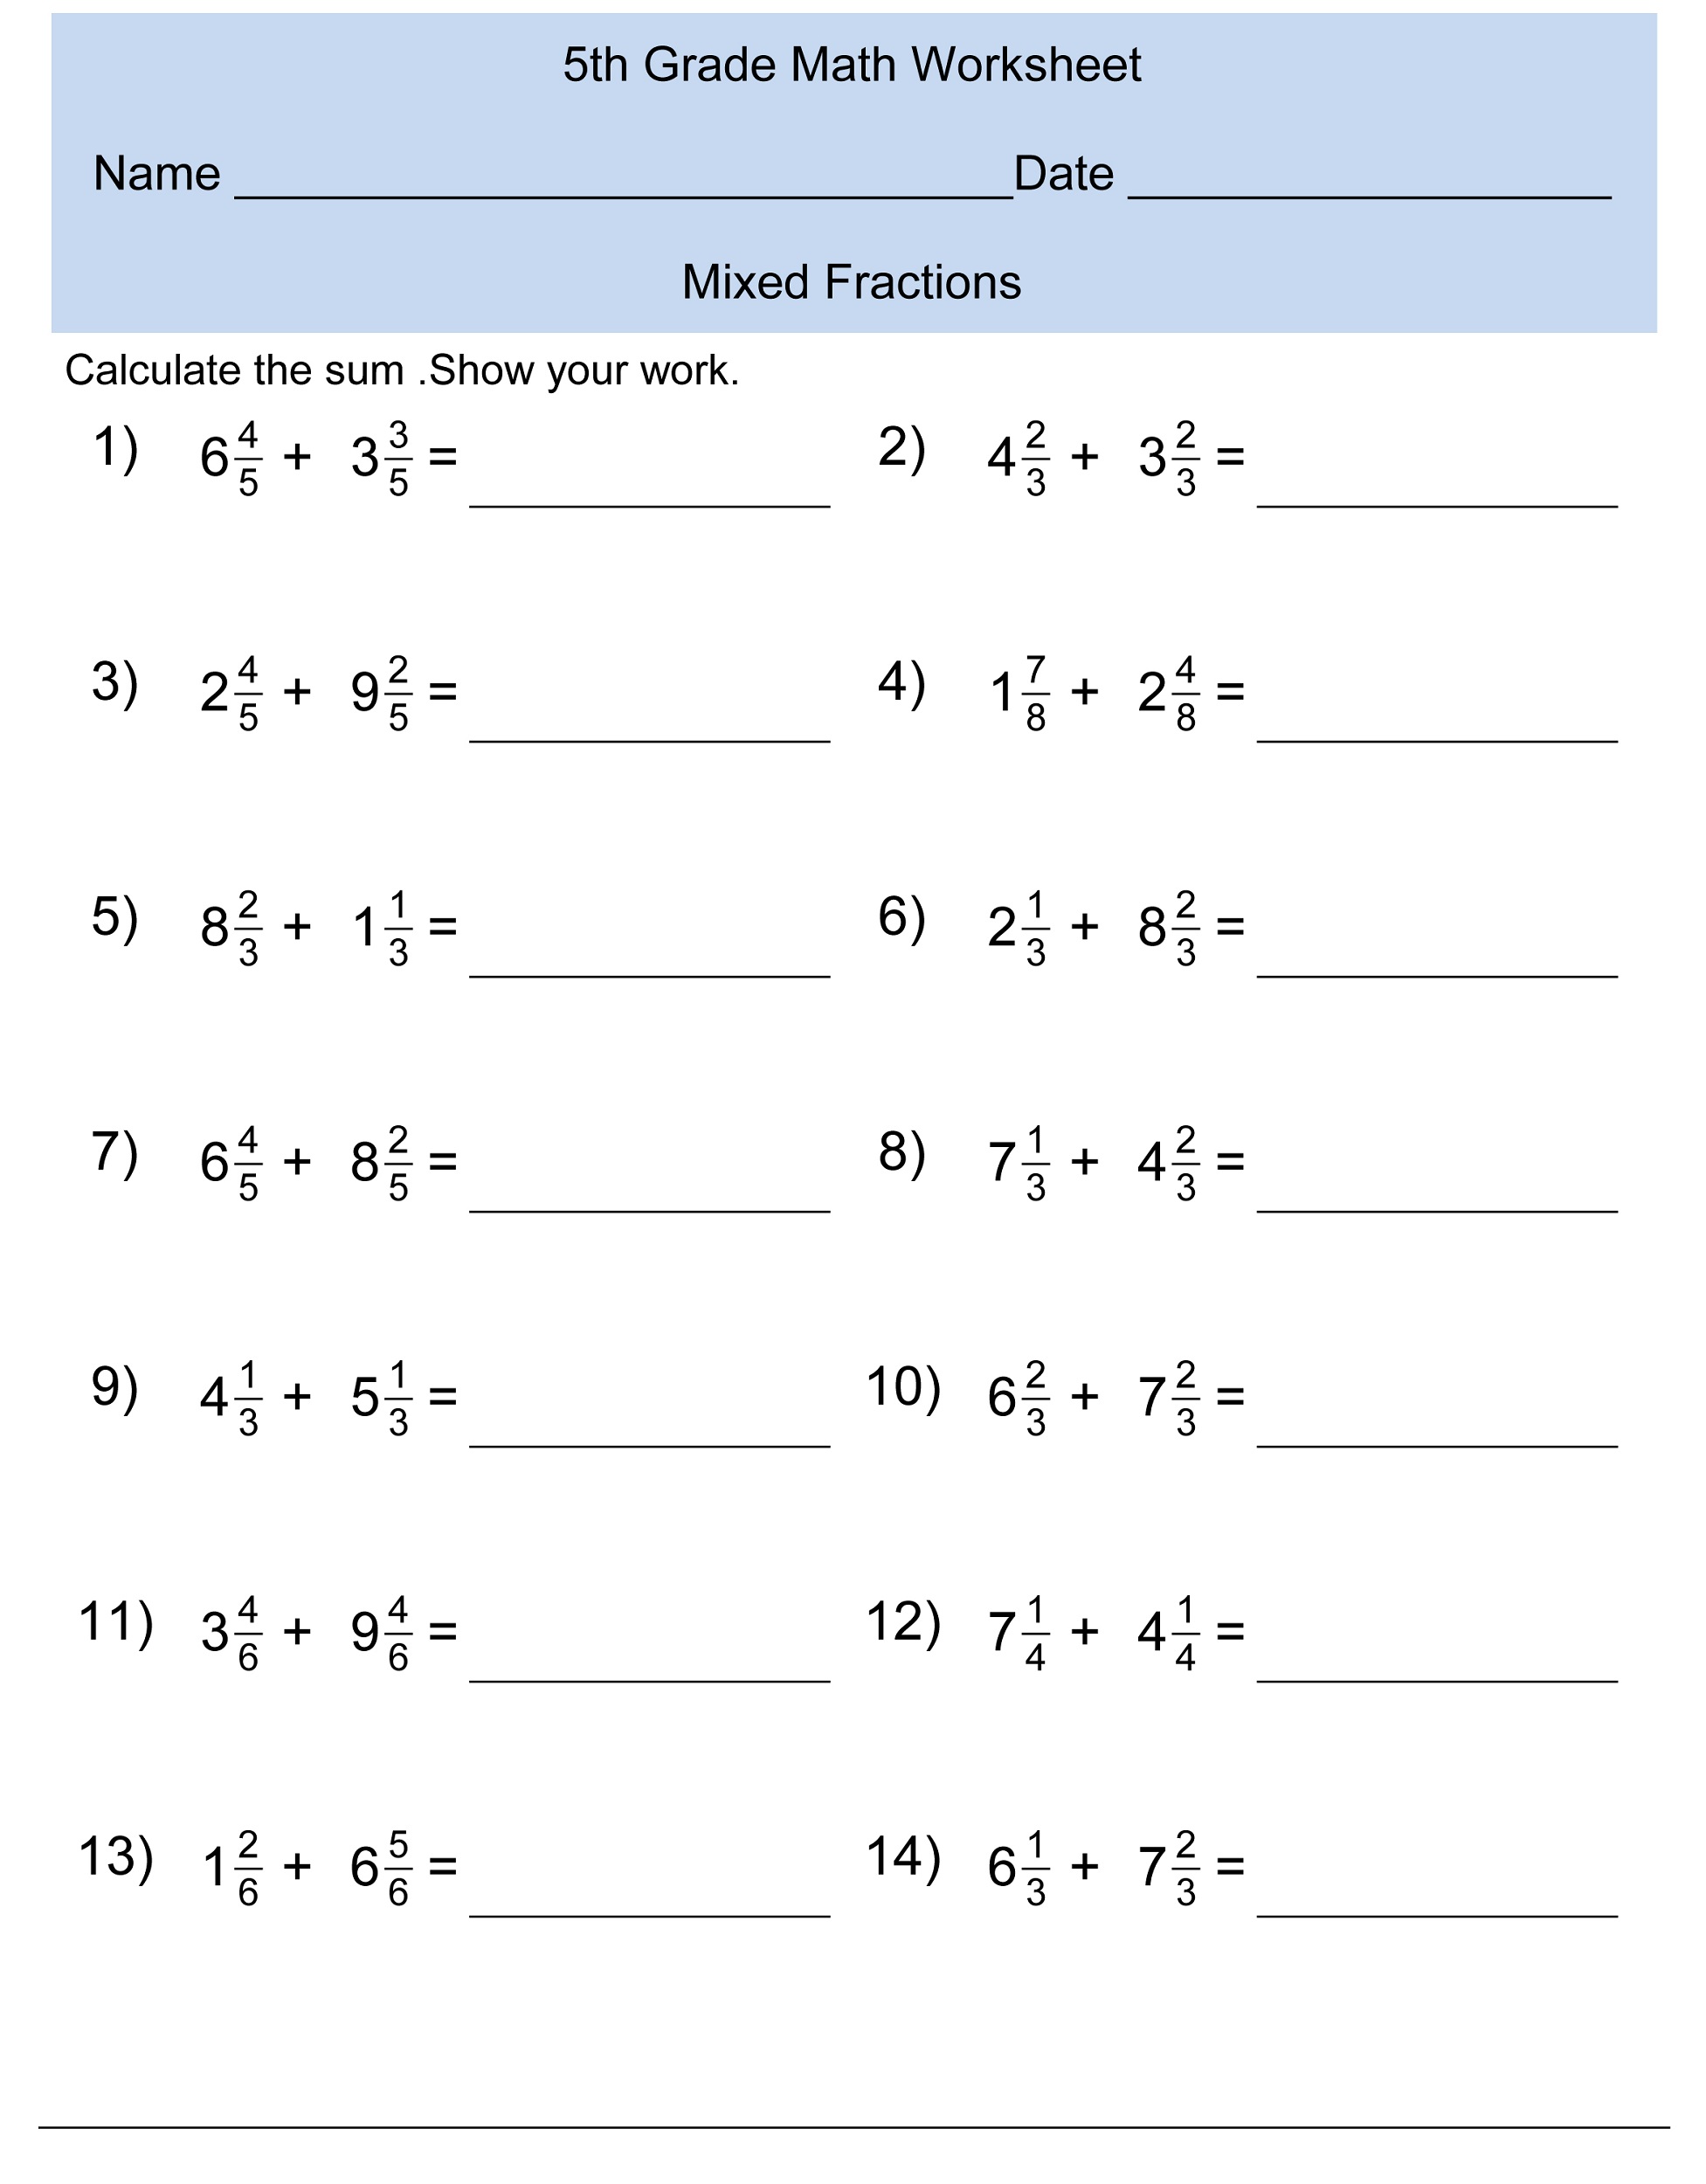 Free 5th Grade Math Worksheets | Activity Shelter